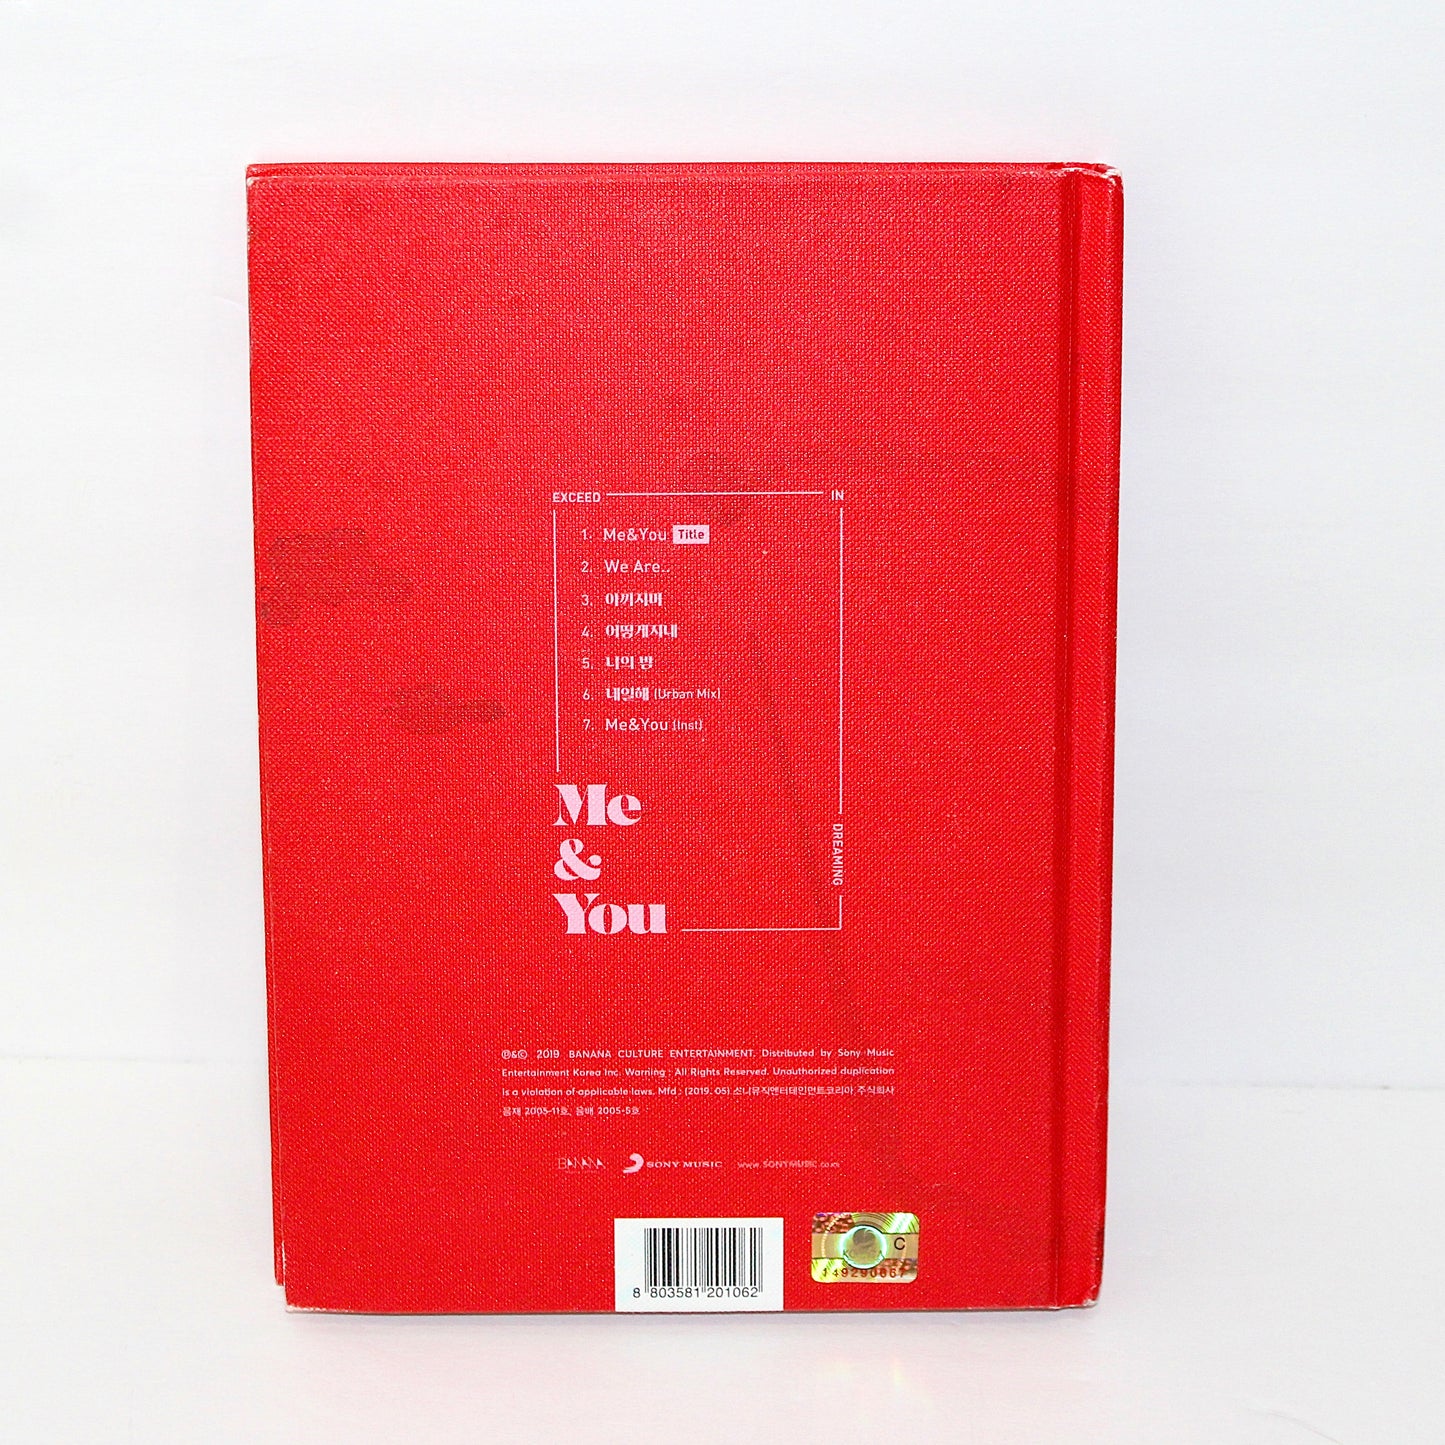 EXID 6th Mini Album: Me & You